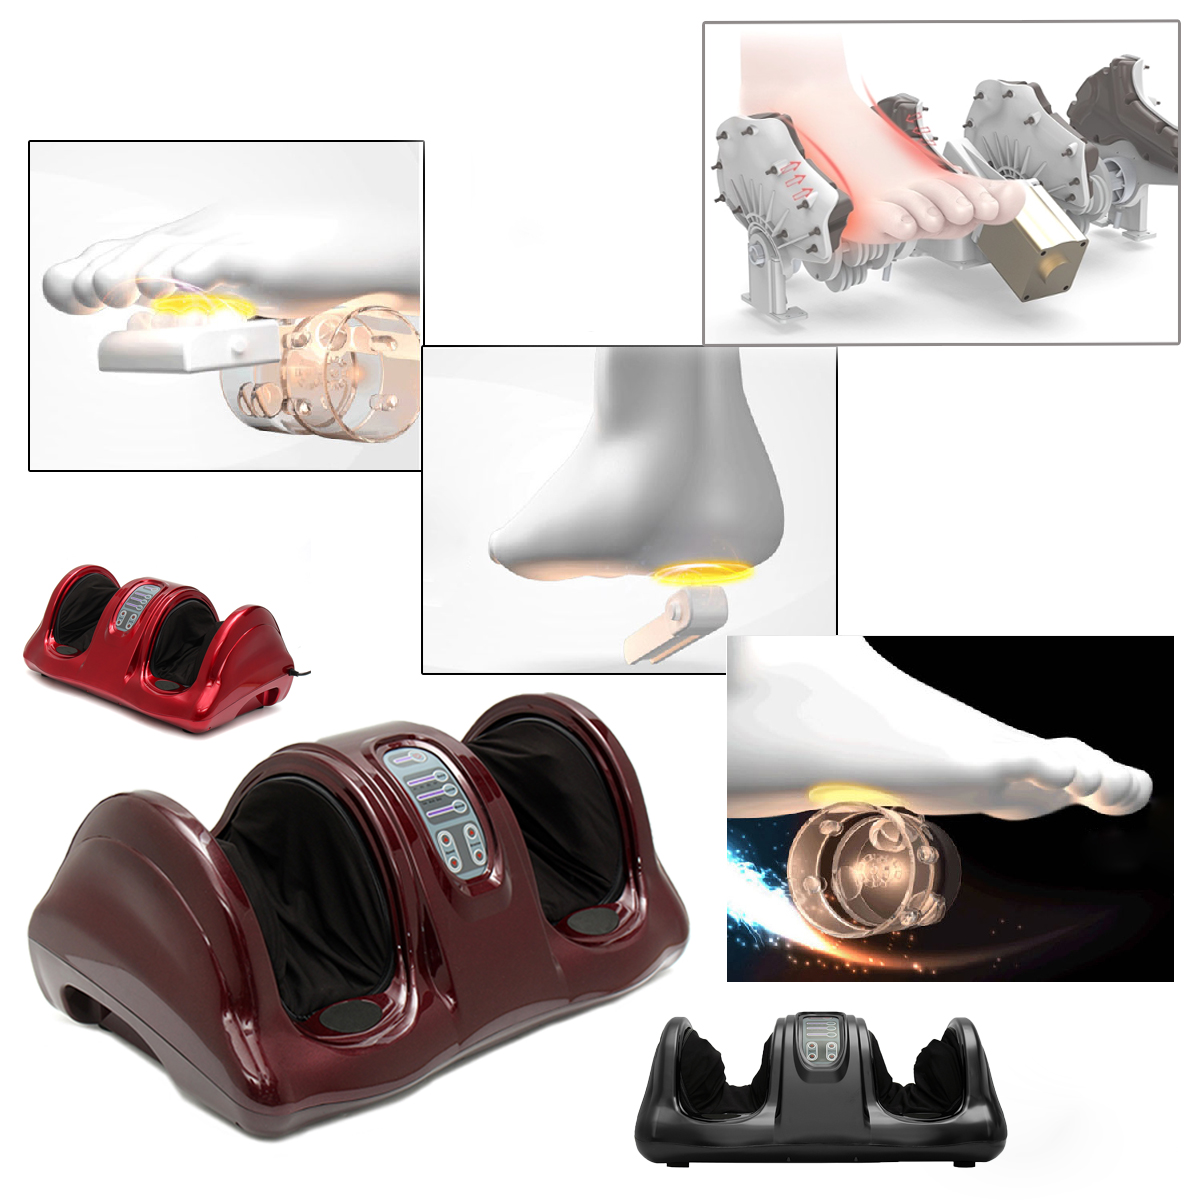 3D-Deluxe-Foot-Ankle-And-Calf-Massage-Health-Electric-Massager-Leg-Reflexology-1359150